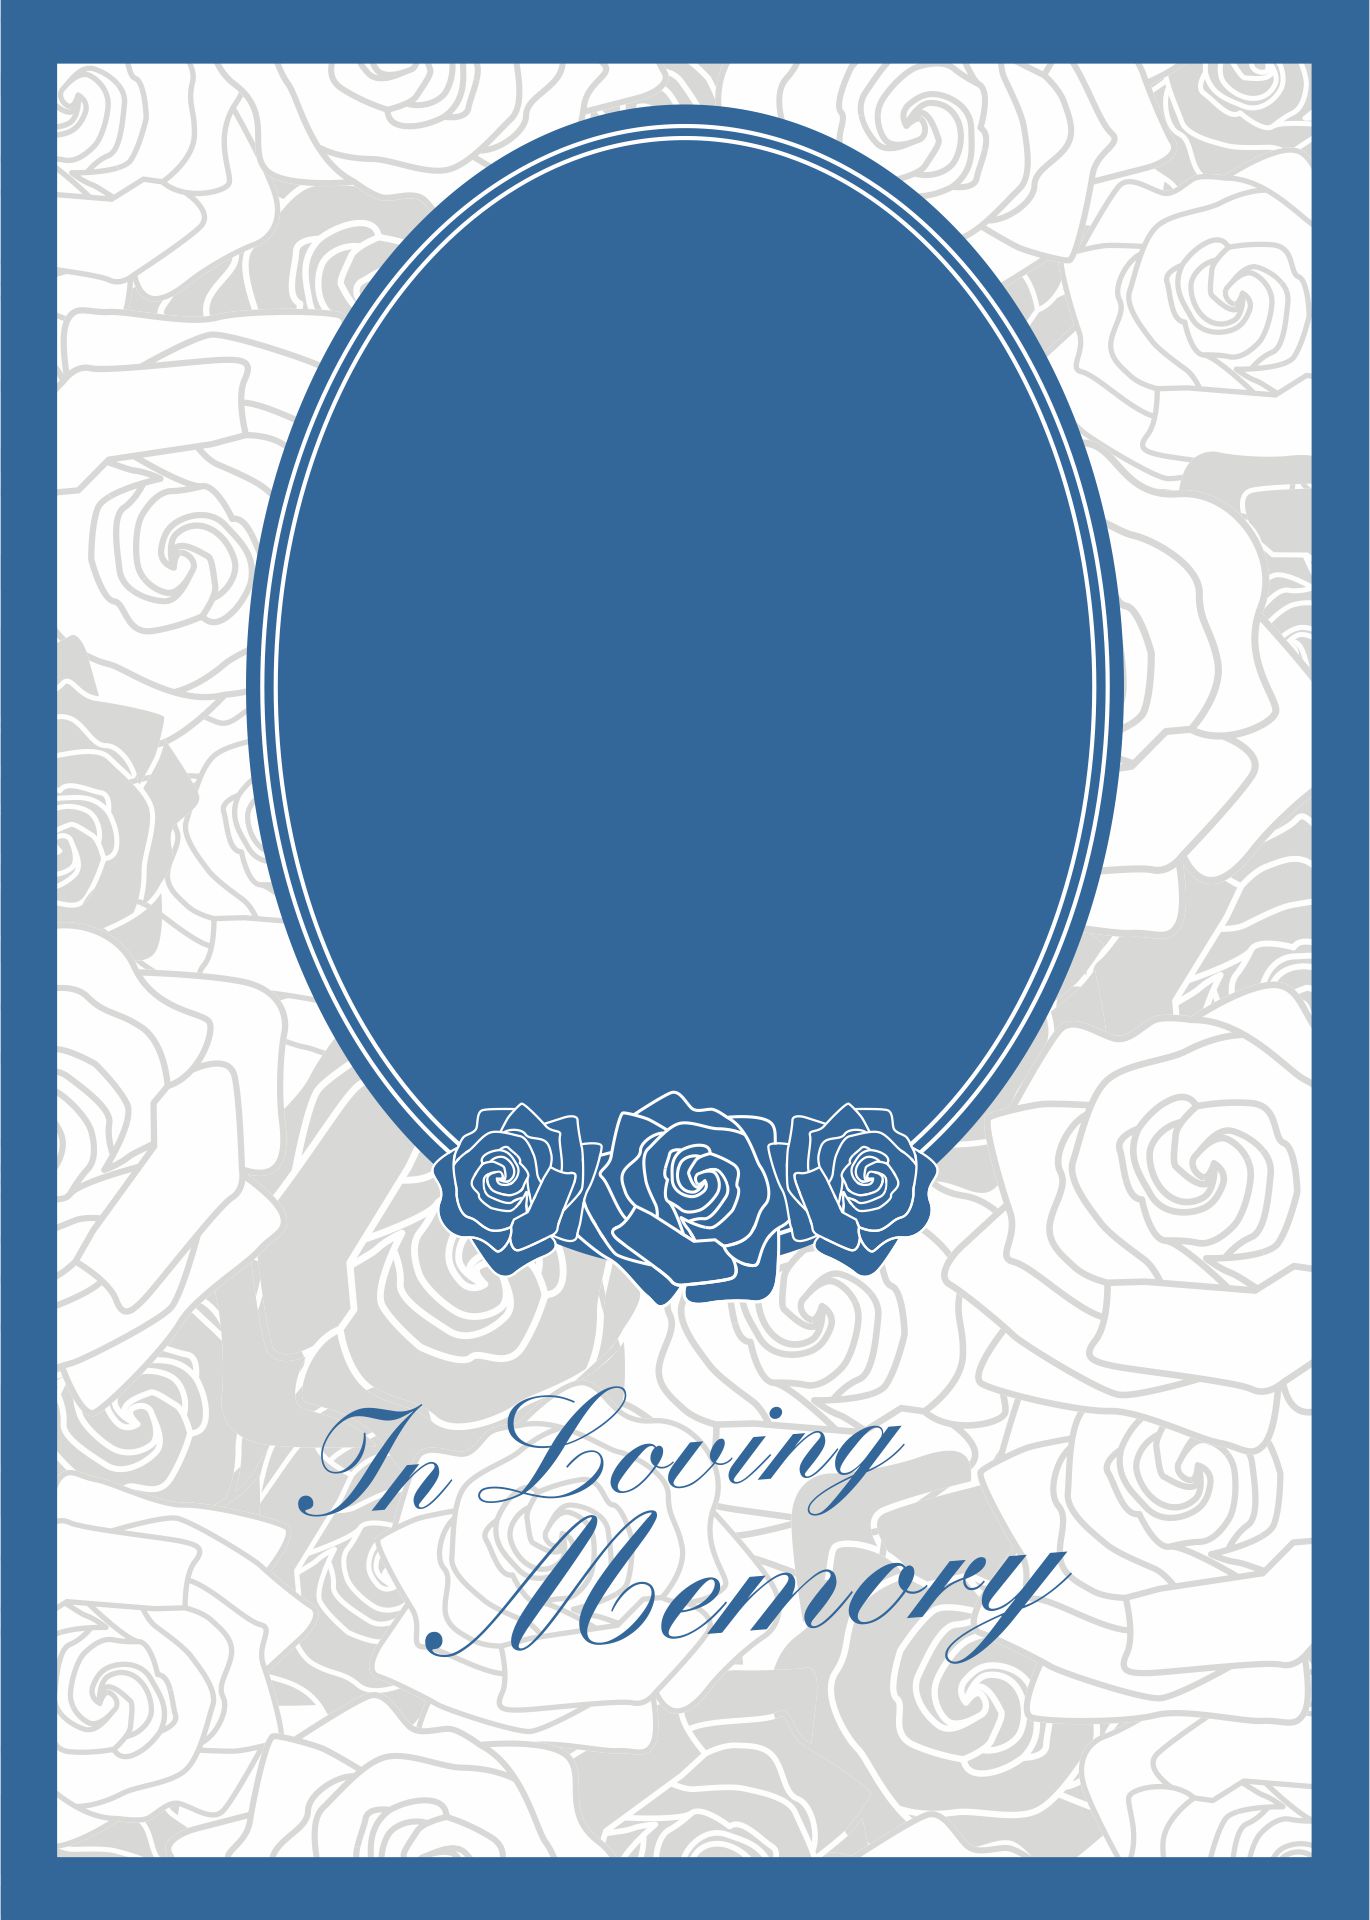 22 Best Printable Memorial Card Templates - printablee.com For Memorial Cards For Funeral Template Free